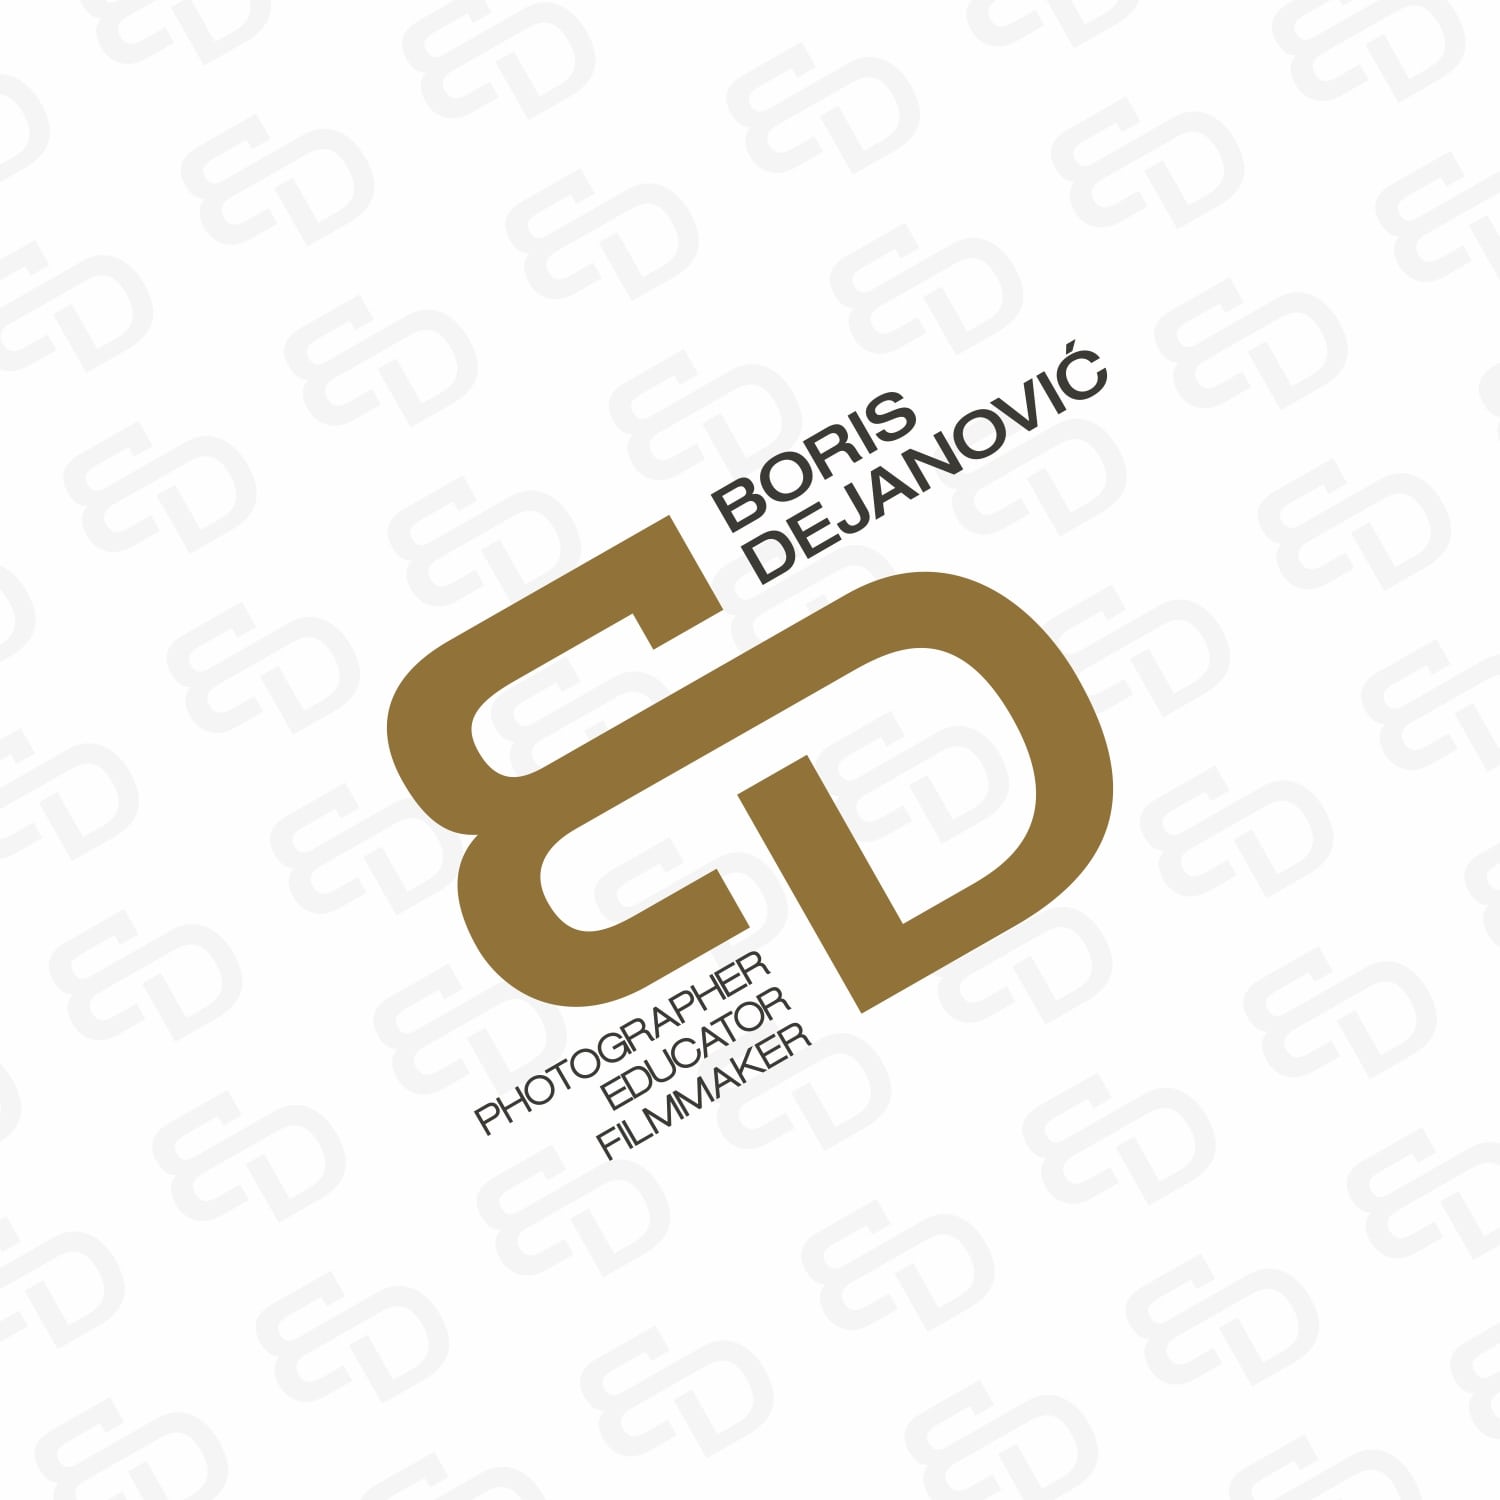 Boris Dejanović logo design